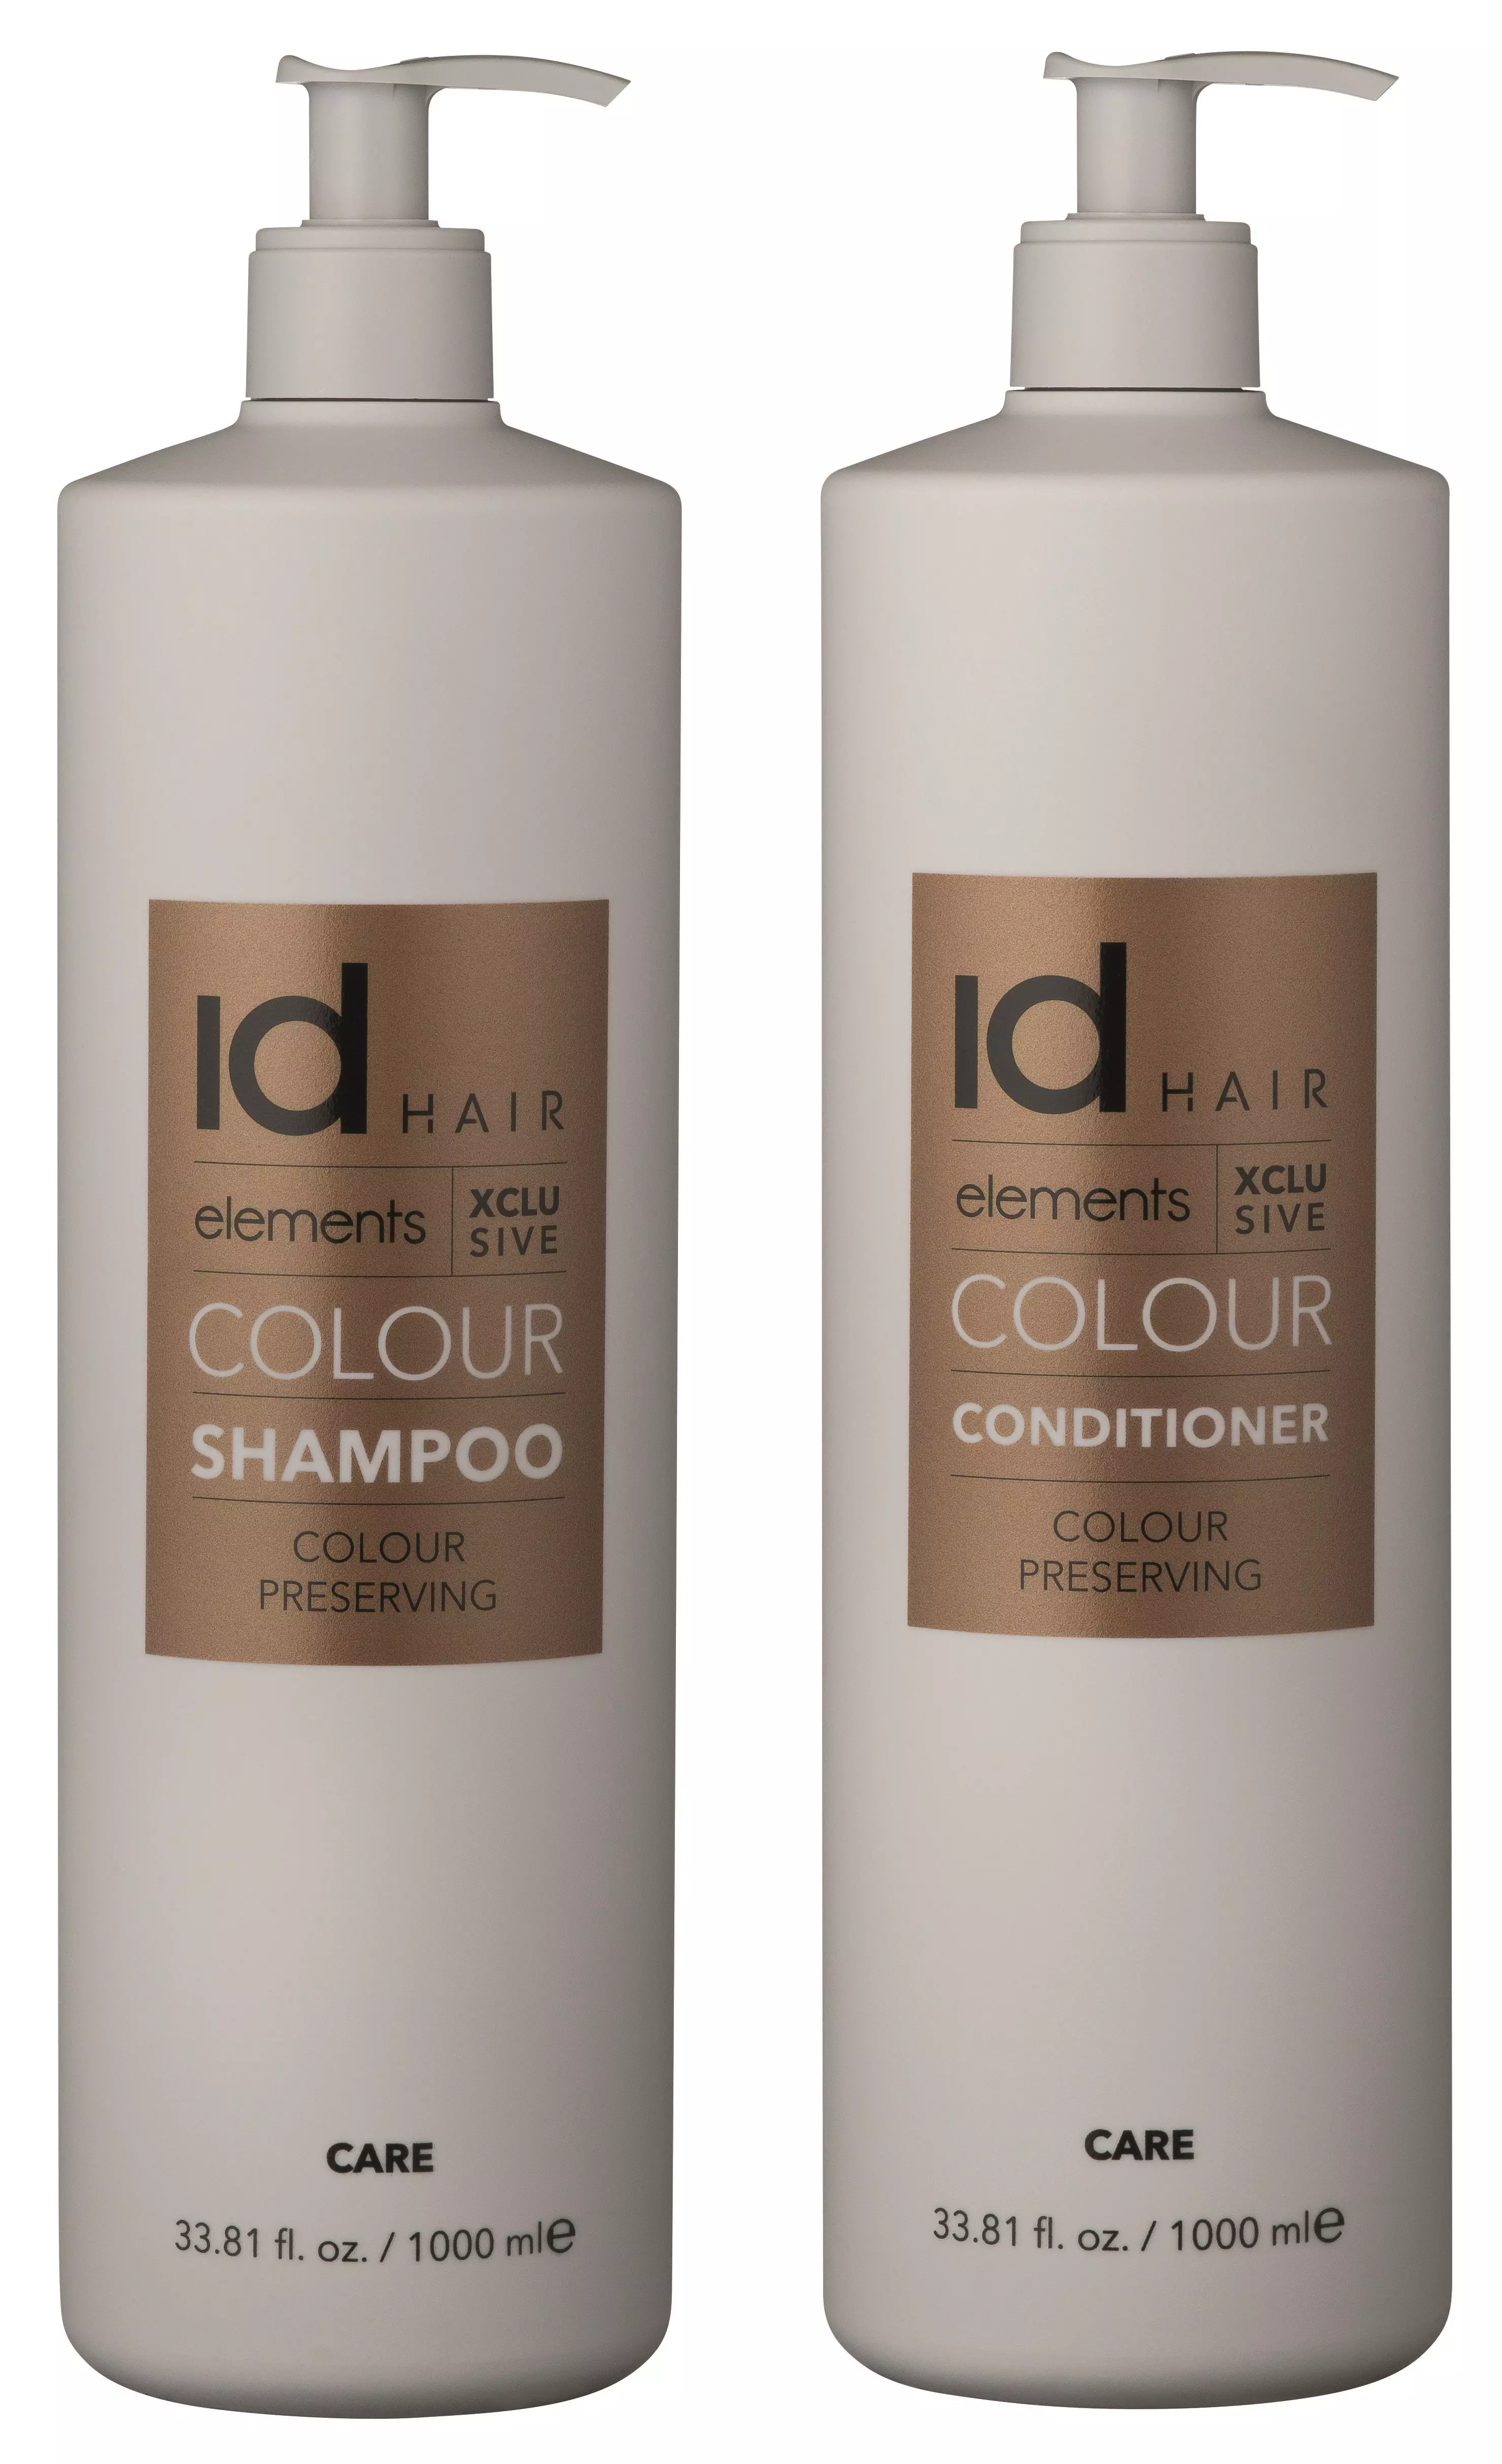 Idhair Elements Xclusive Colour Shampoo 1000